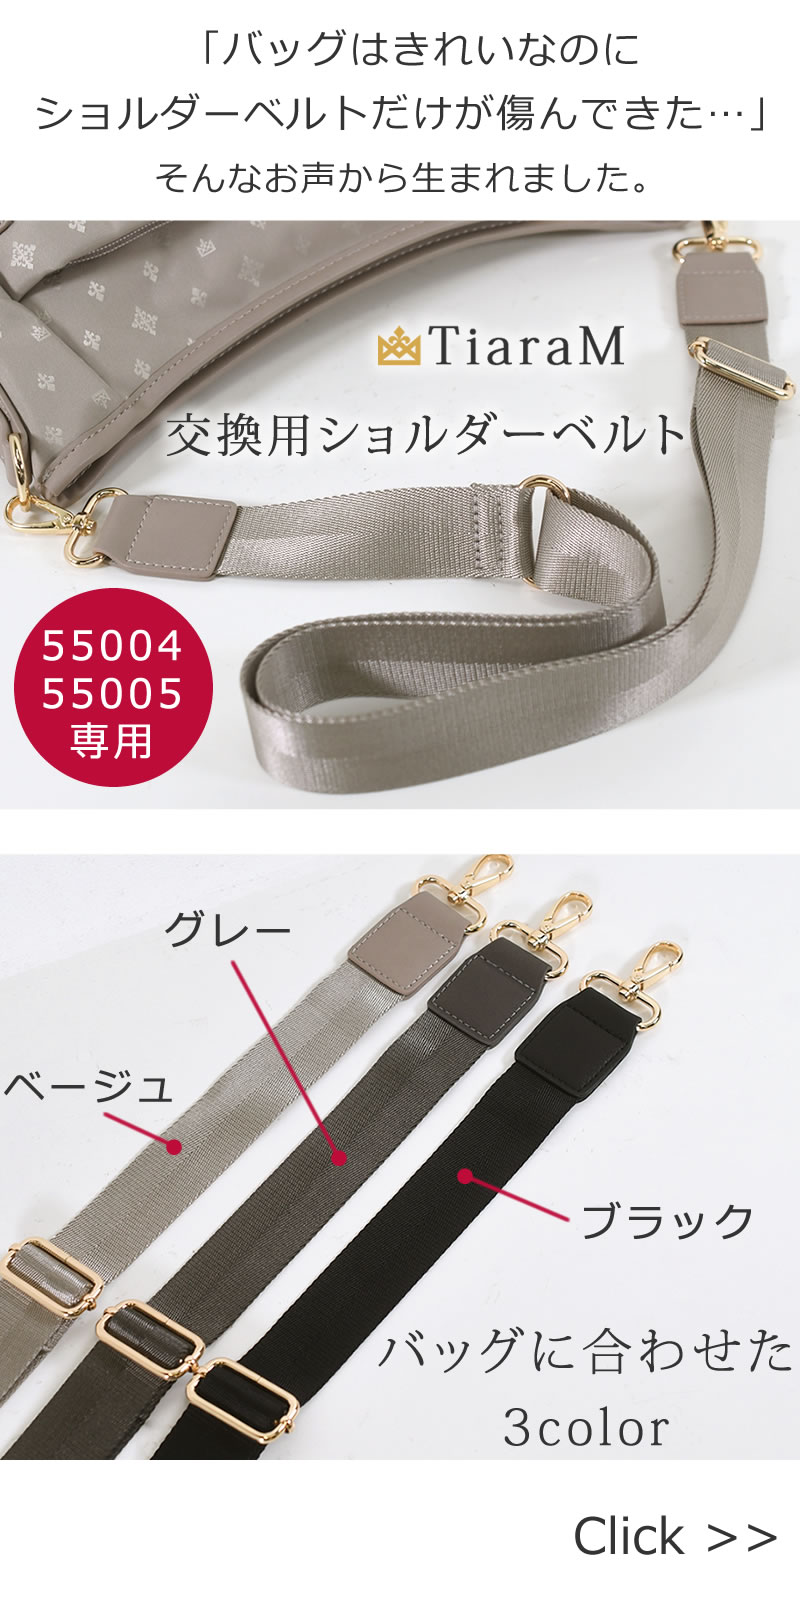 memezawakaban(目々澤鞄) TiaraMシリーズ新商品交換用ショルダーベルト55999